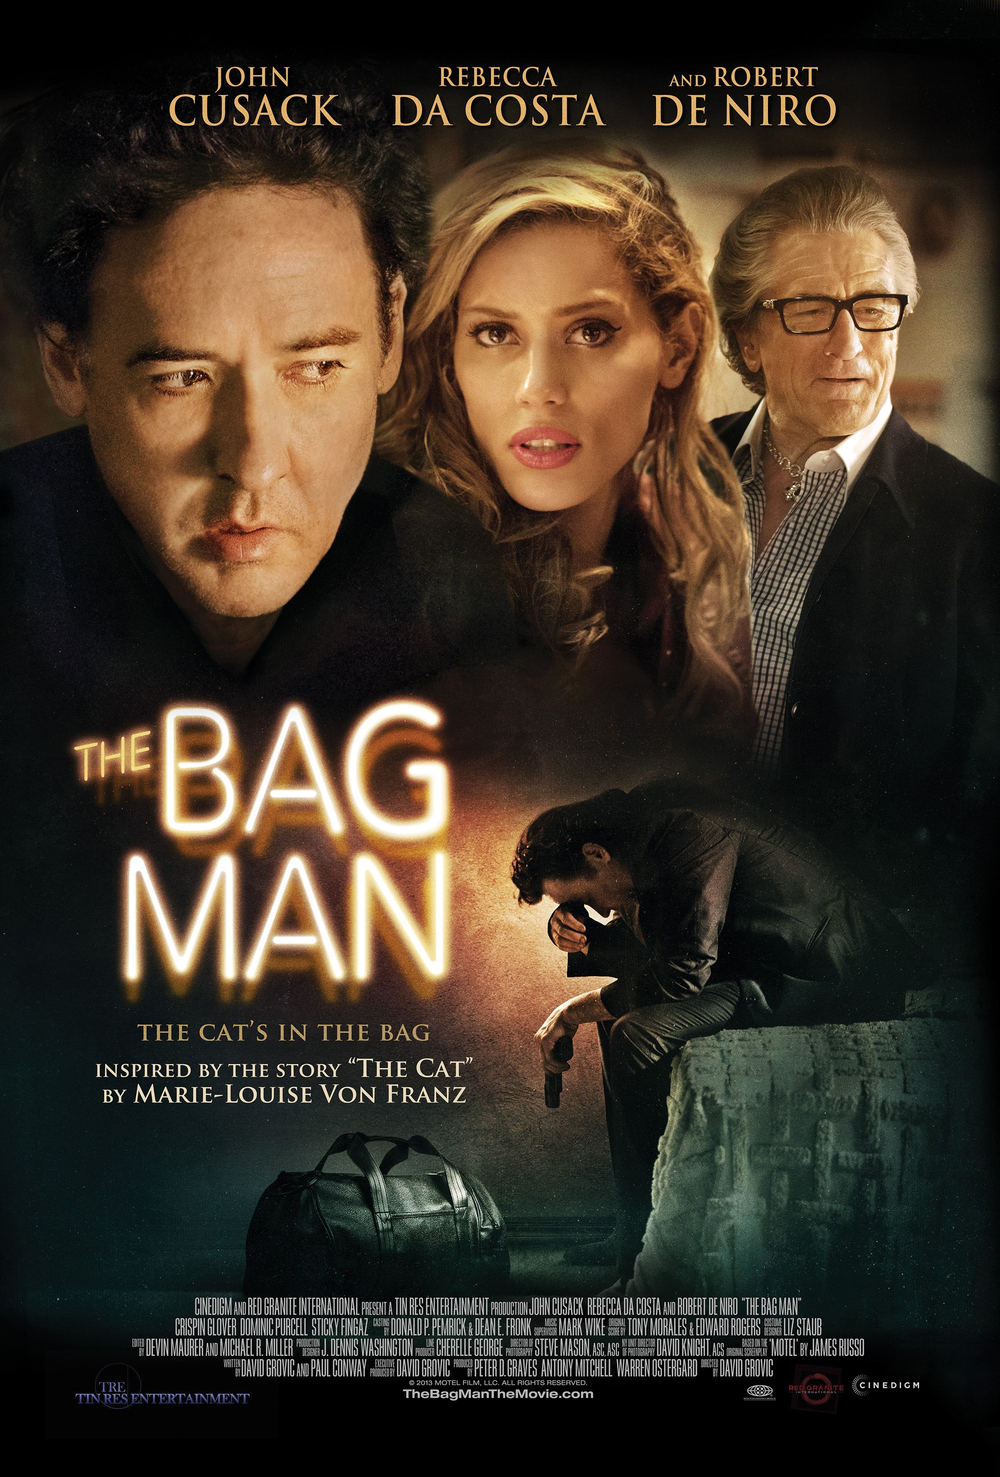 The Bag Man trailer NL - YouTube